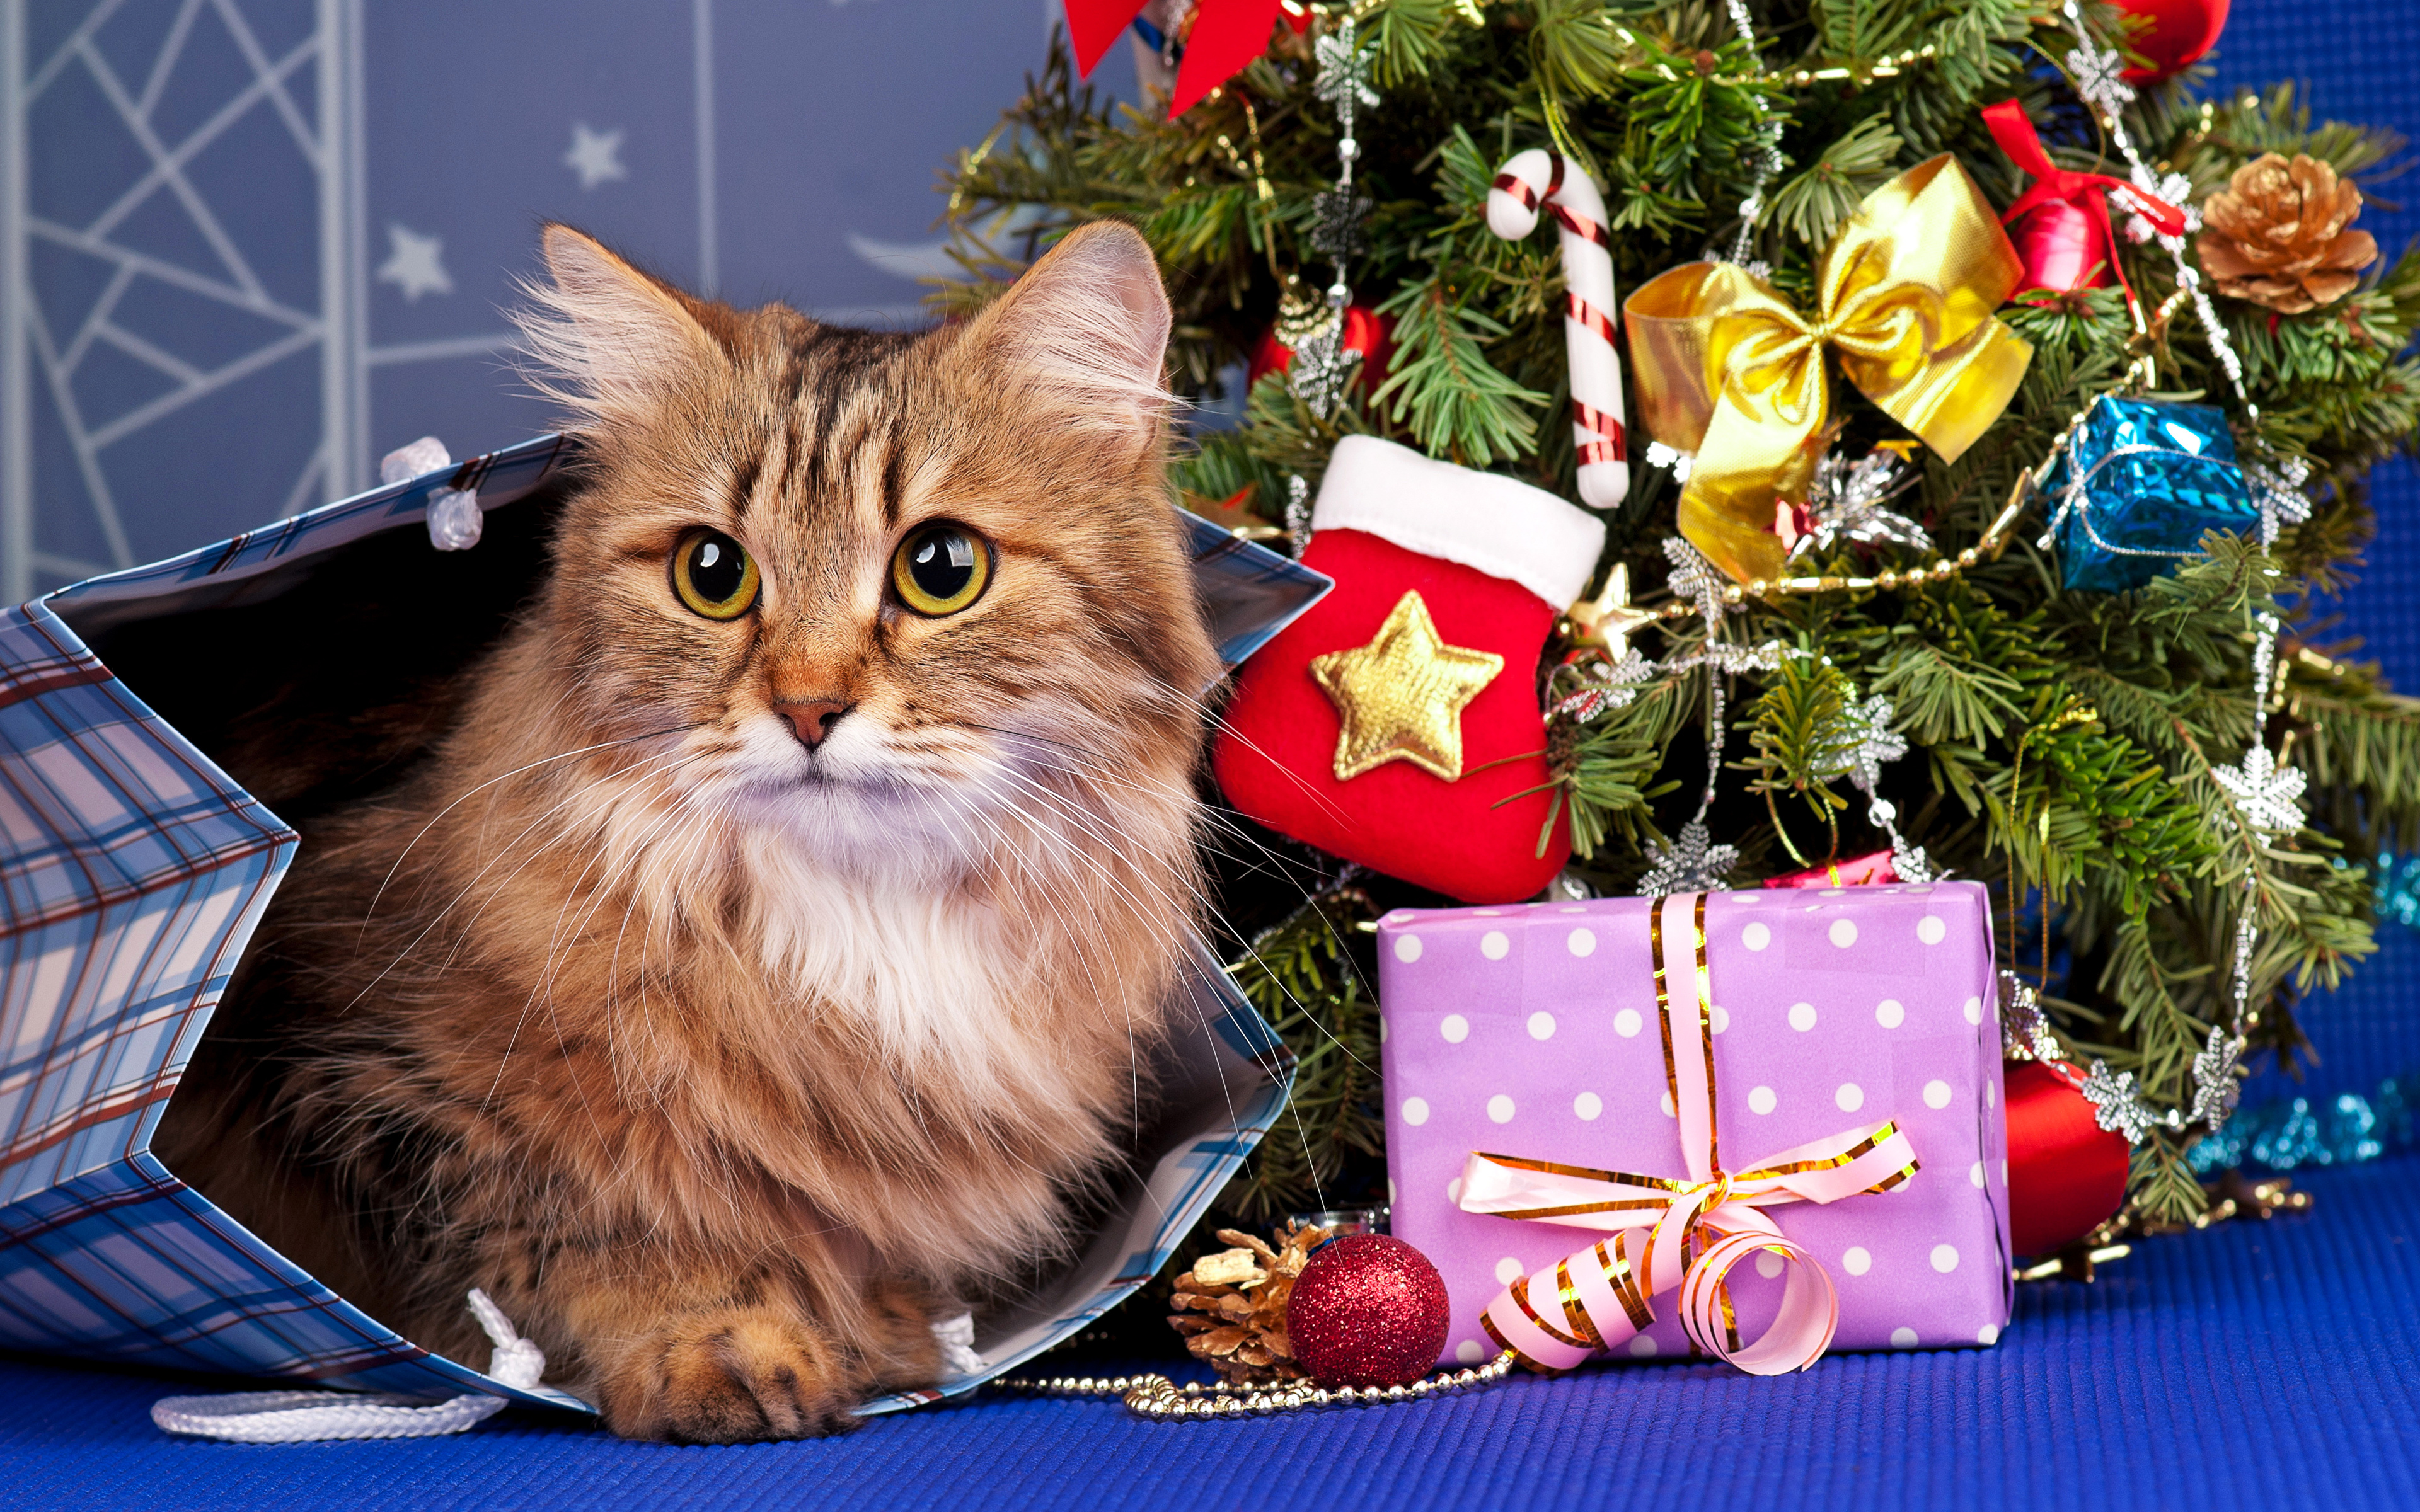 https://s1.1zoom.ru/b5050/552/Holidays_Christmas_Cats_464822_3840x2400.jpg